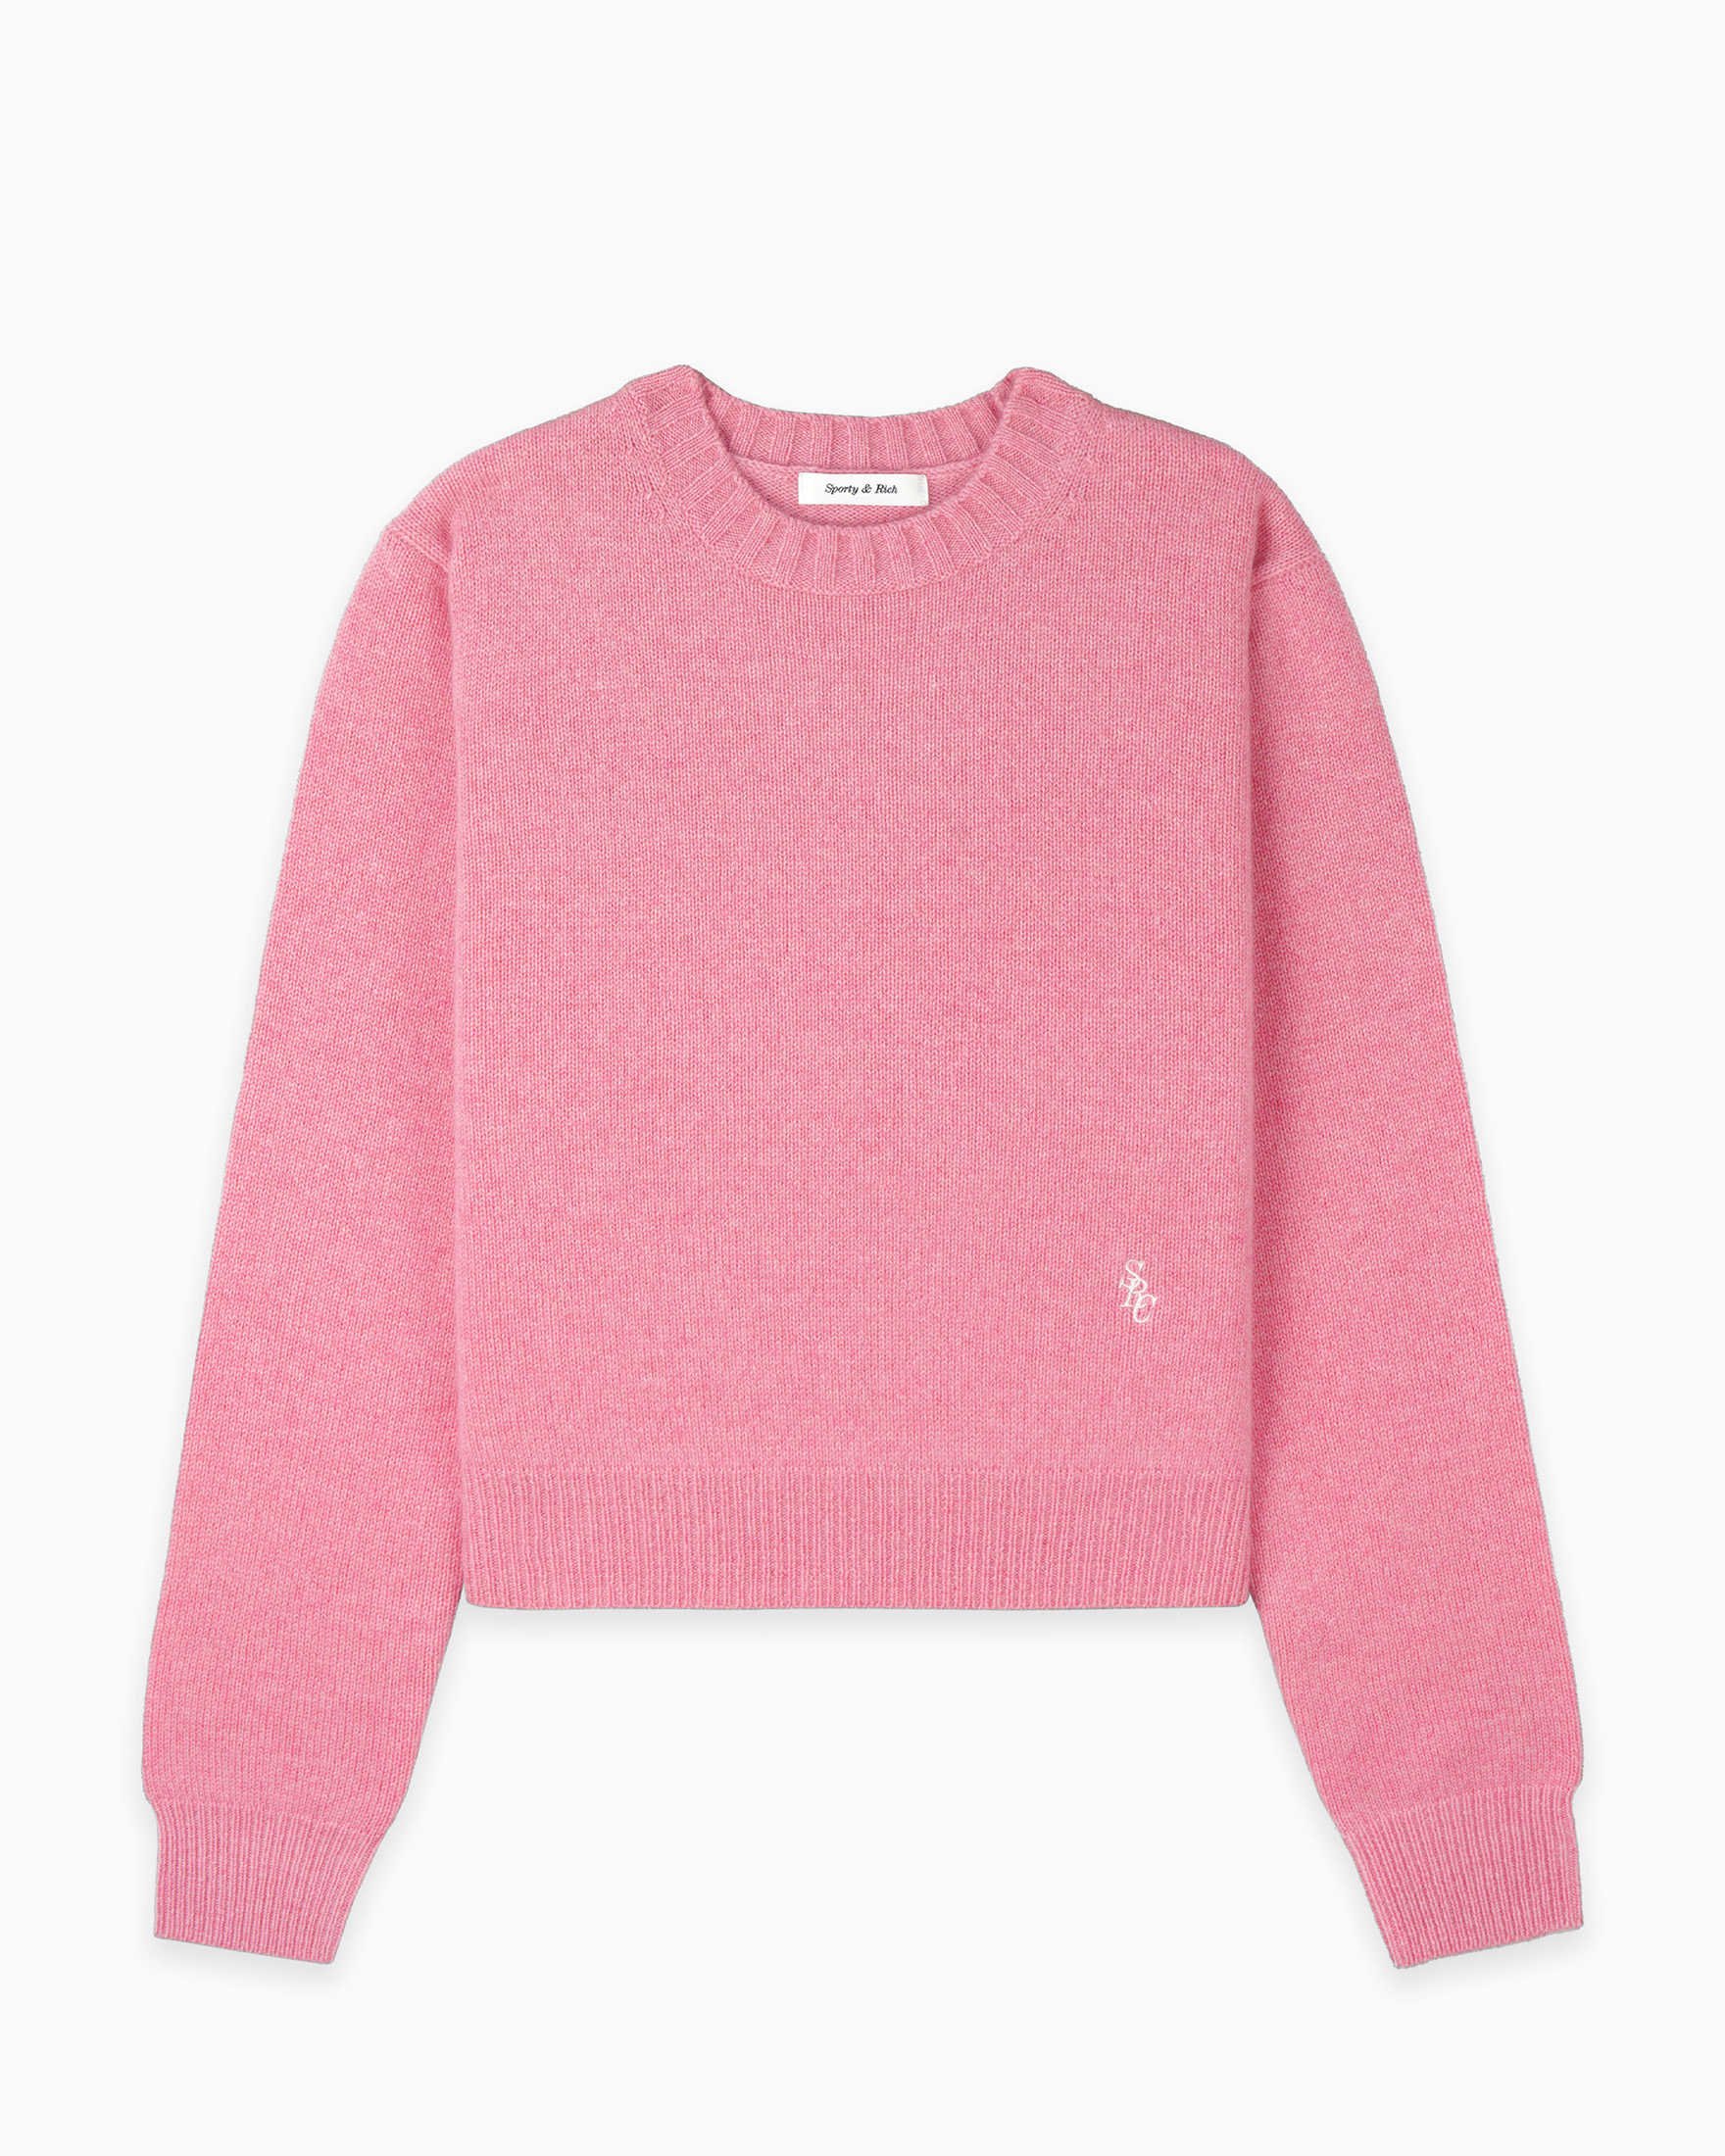 Cashmere Sweater Sporty & Rich Tops Crewnecks Pink